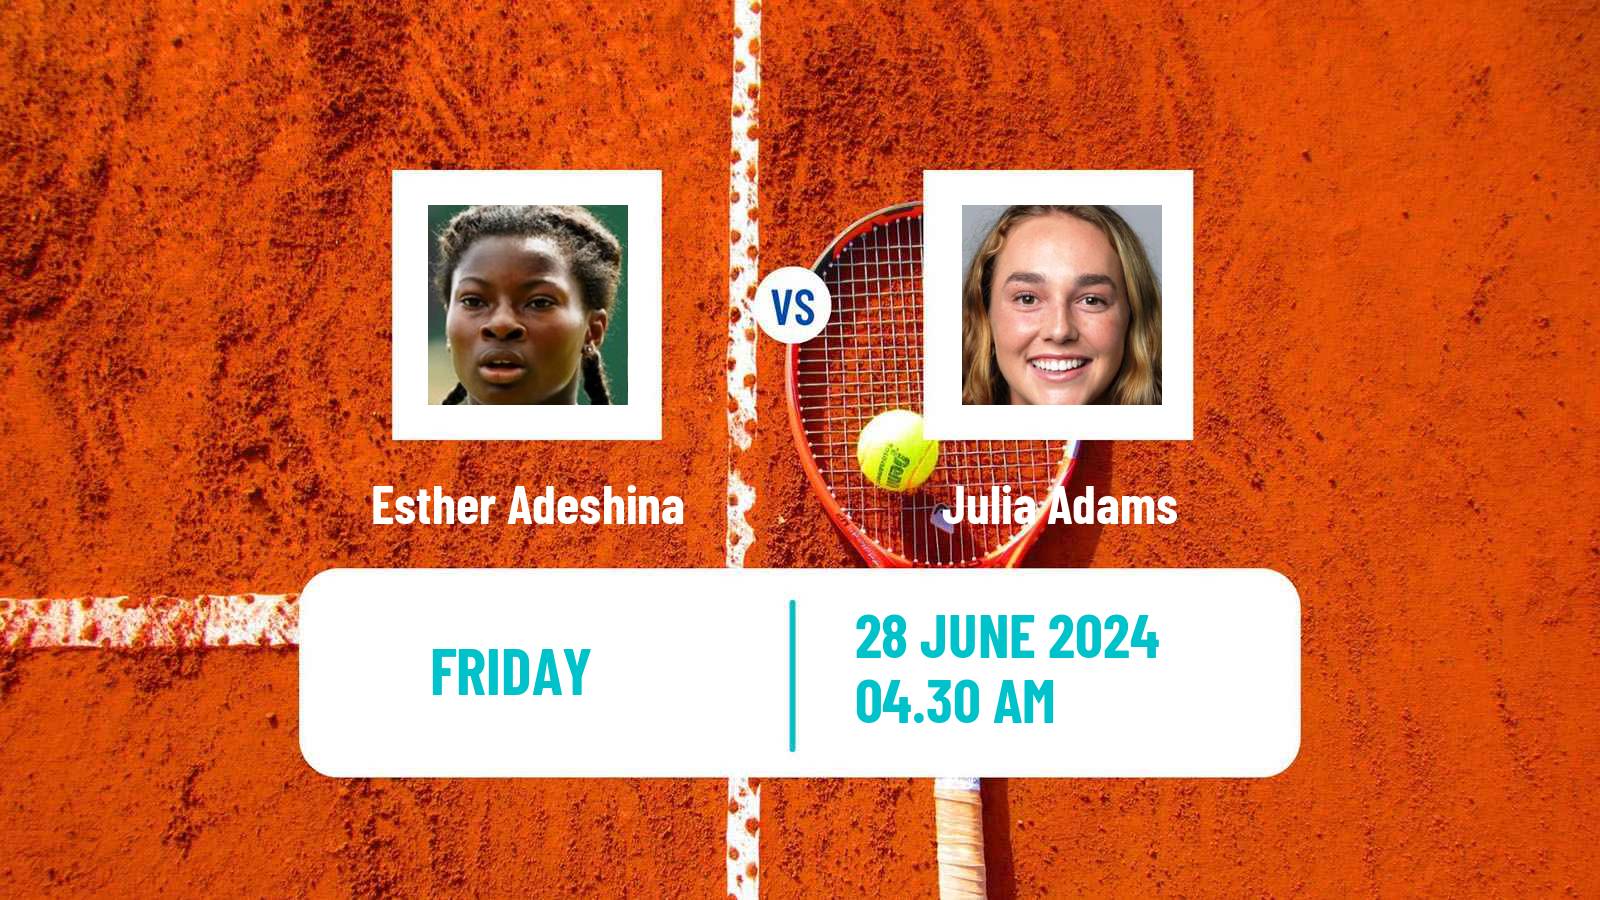 Tennis ITF W15 Monastir 24 Women Esther Adeshina - Julia Adams